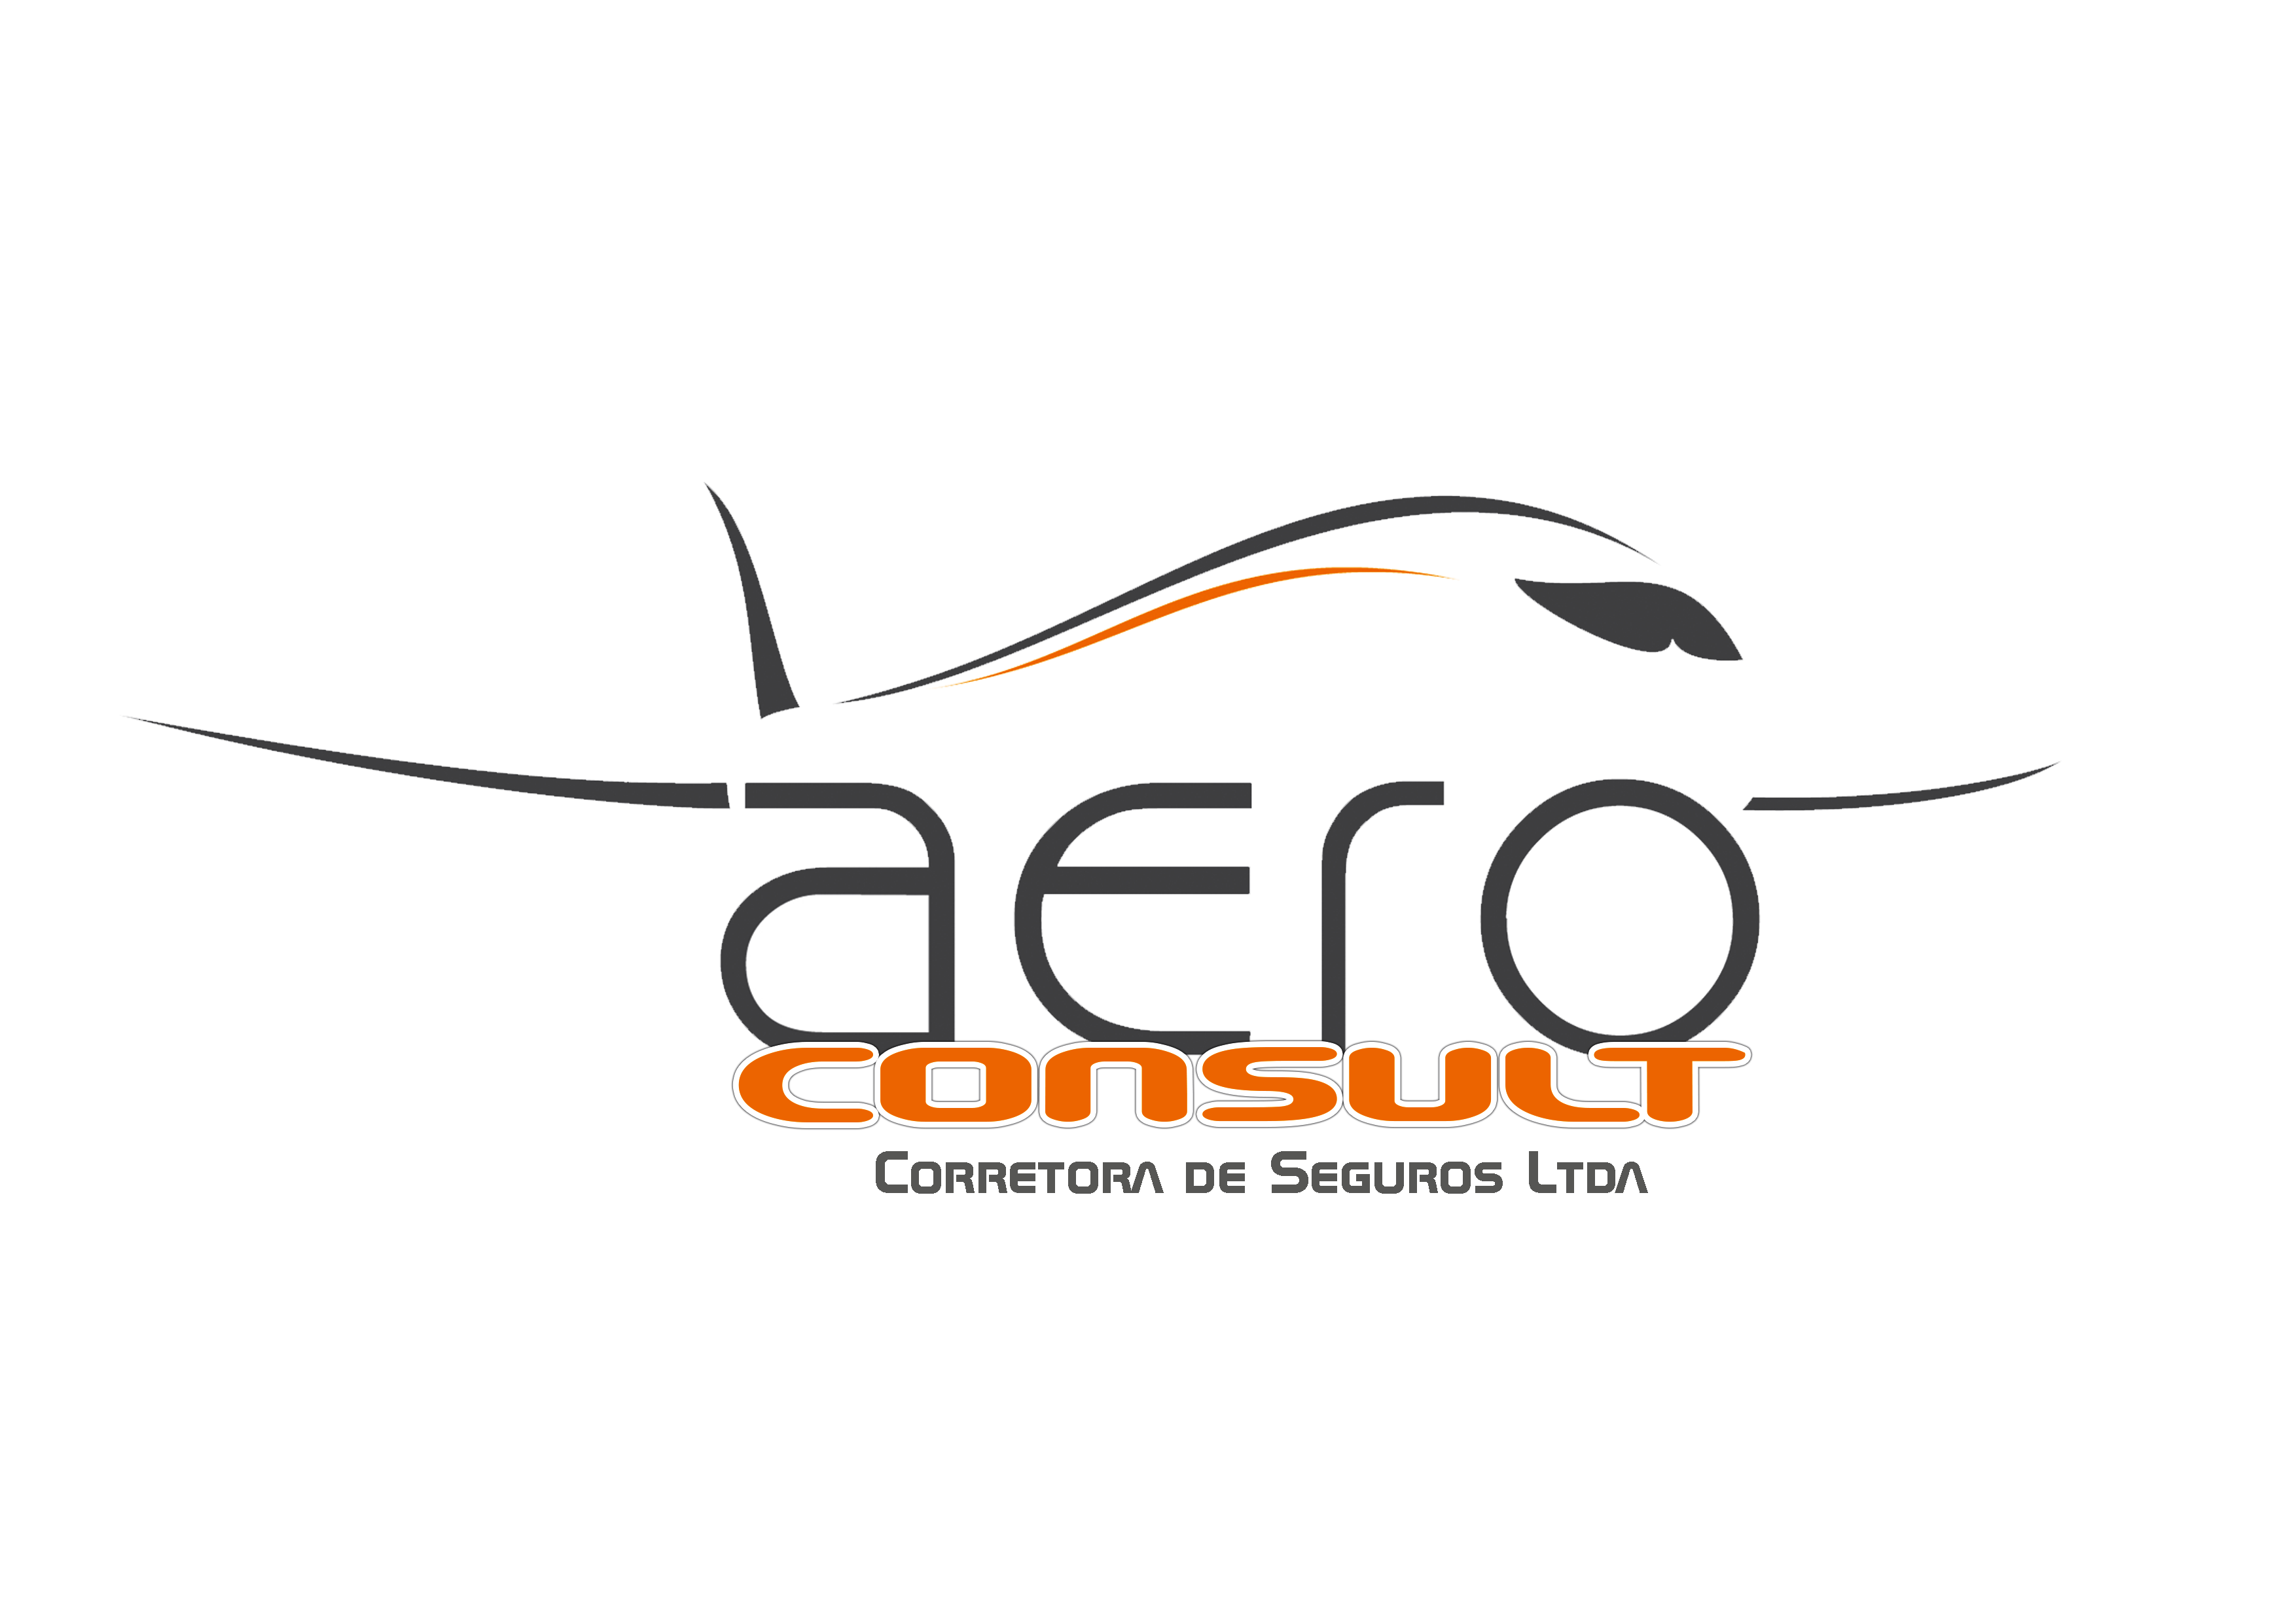 Aeroconsult PlusPng.com 